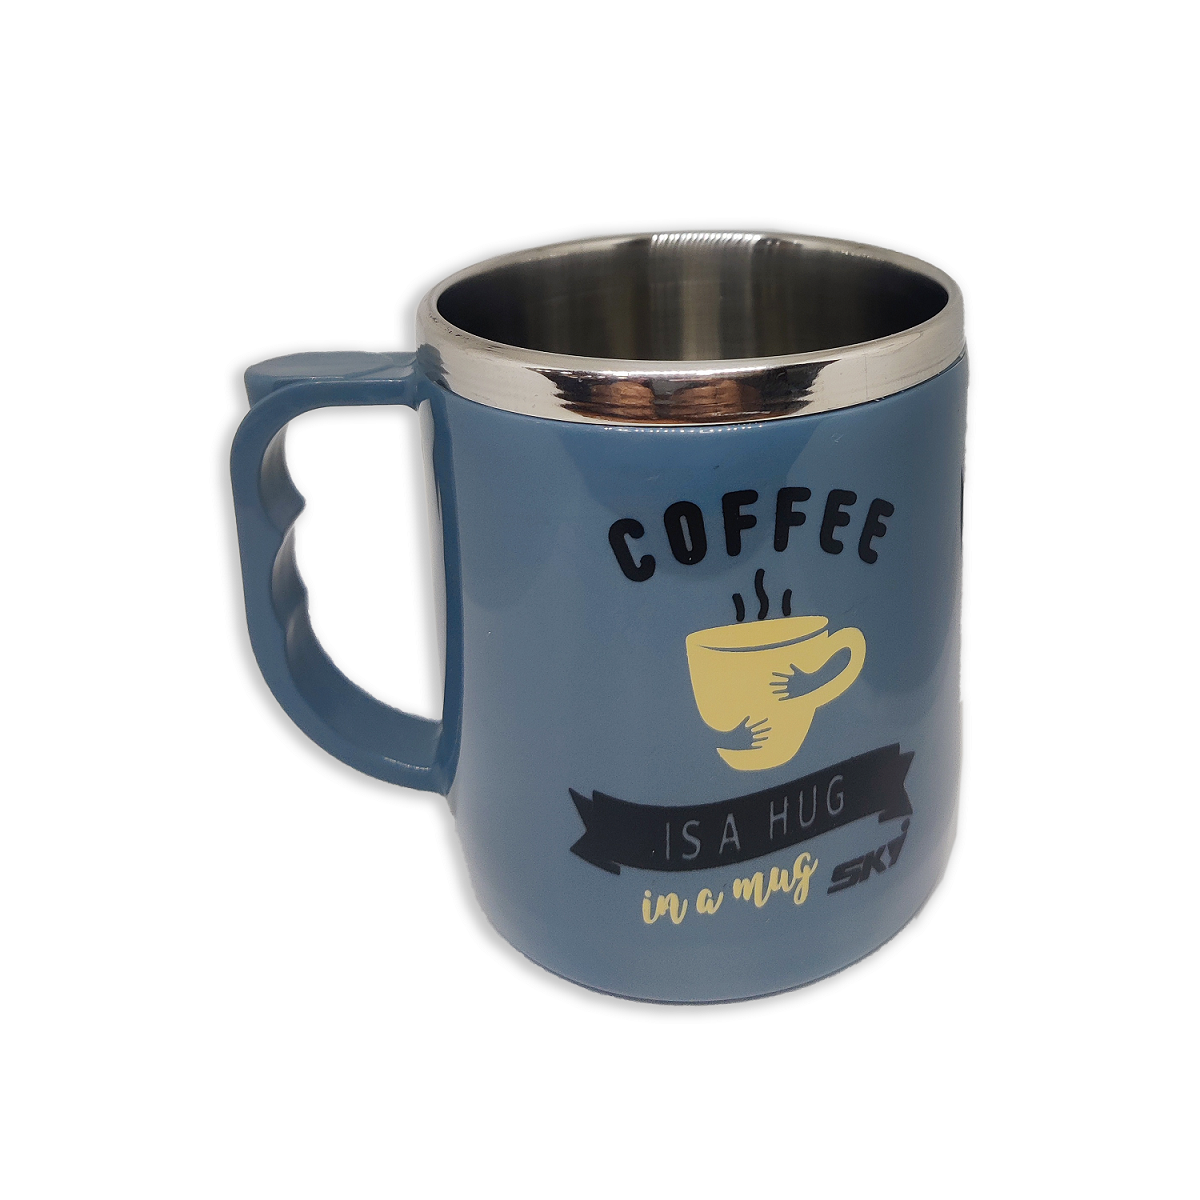 Jolly Steel Small Blue Coffee Mug